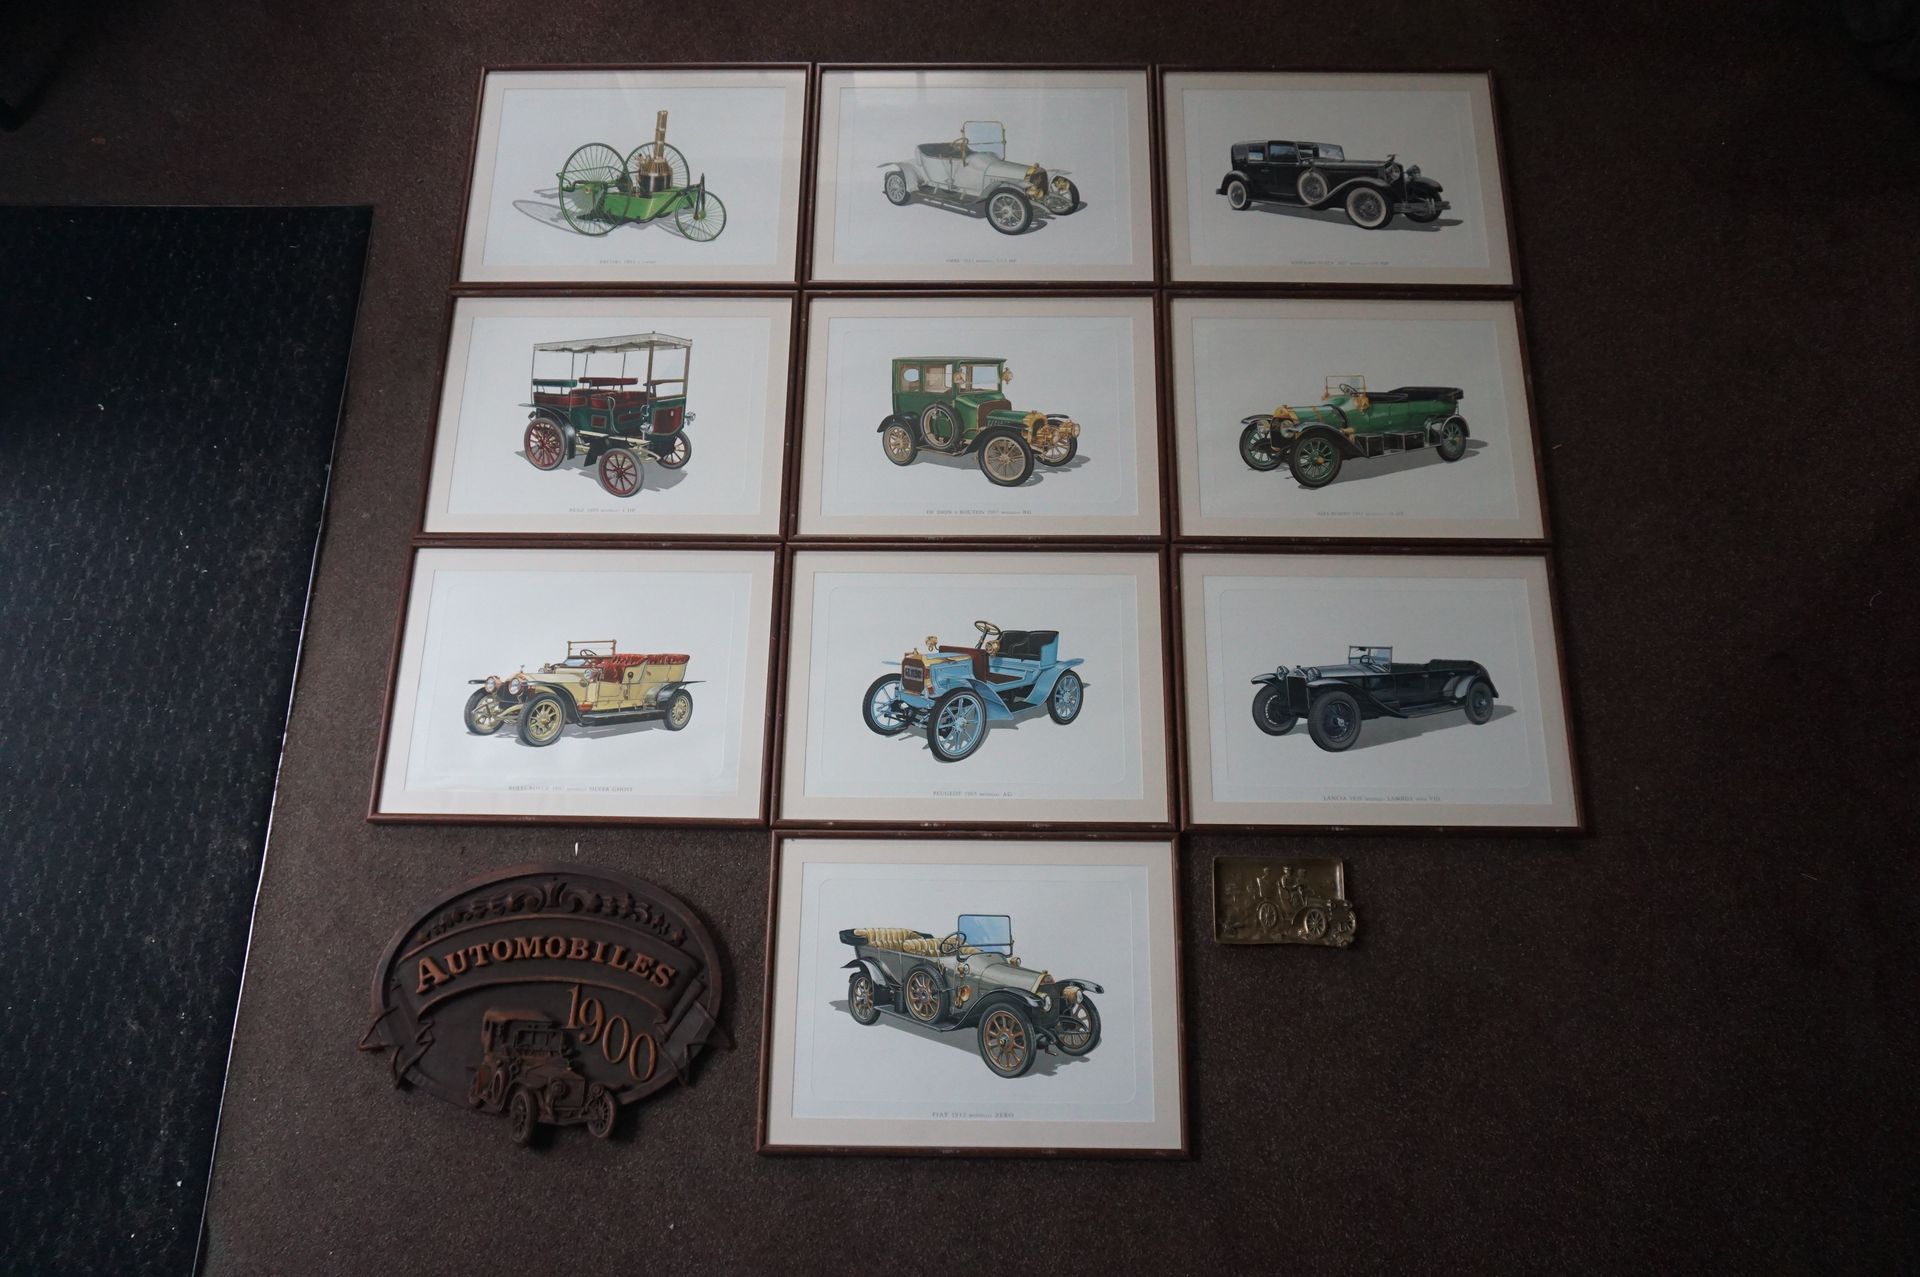 Null 一共有10个画框（印在canson上，代表1891至1920年的模型）。
木雕《汽车1900》。
表现祖先的铜板，背景是3个人在轮子上，背景是风景。